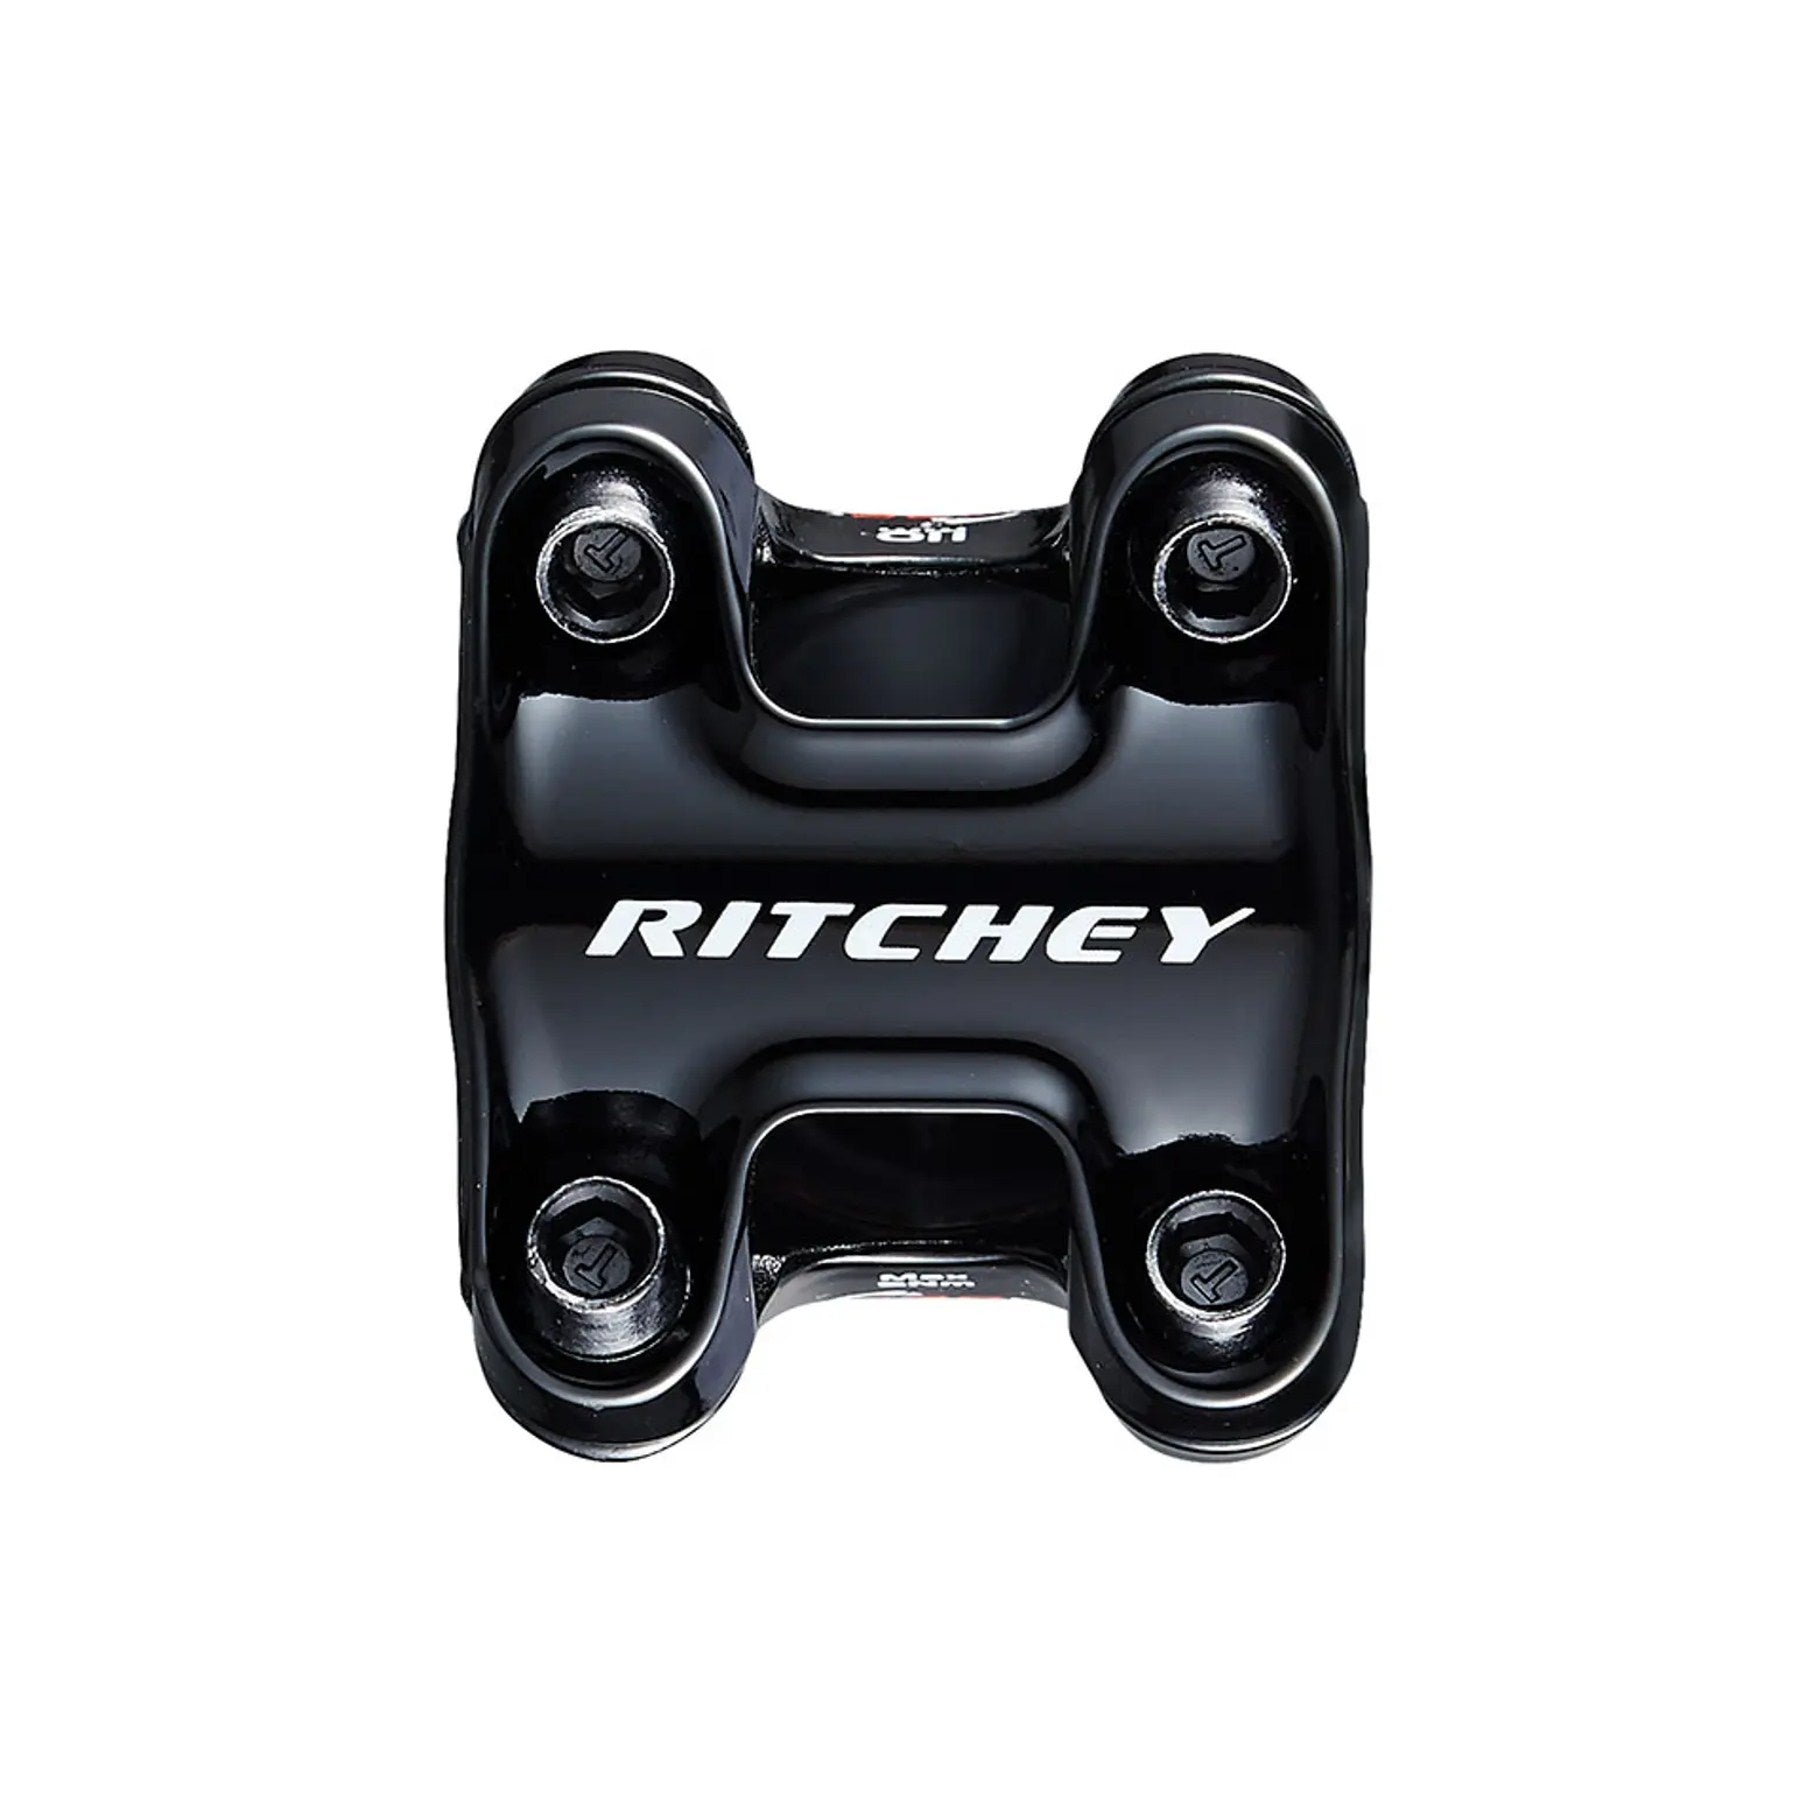 Ritchey WCS C220 stem - Retrogression Fixed Gear